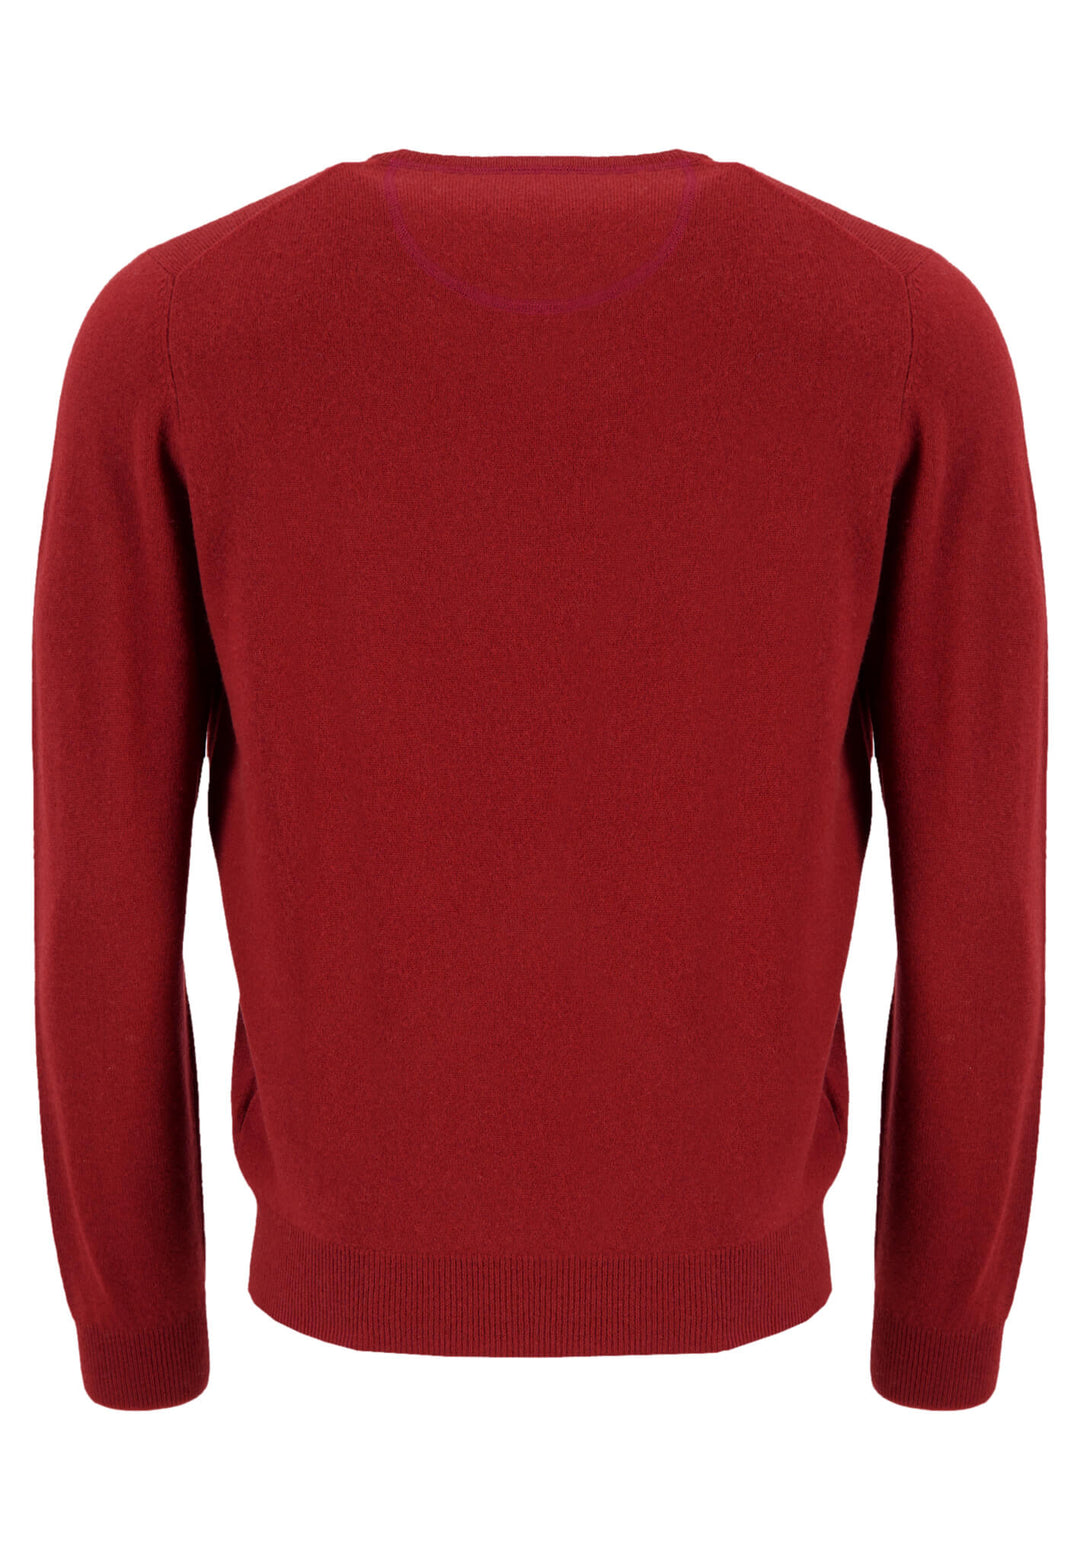 Weicher Pullover | Shop – Merino-Kaschmir aus Online FYNCH-HATTON Offizieller